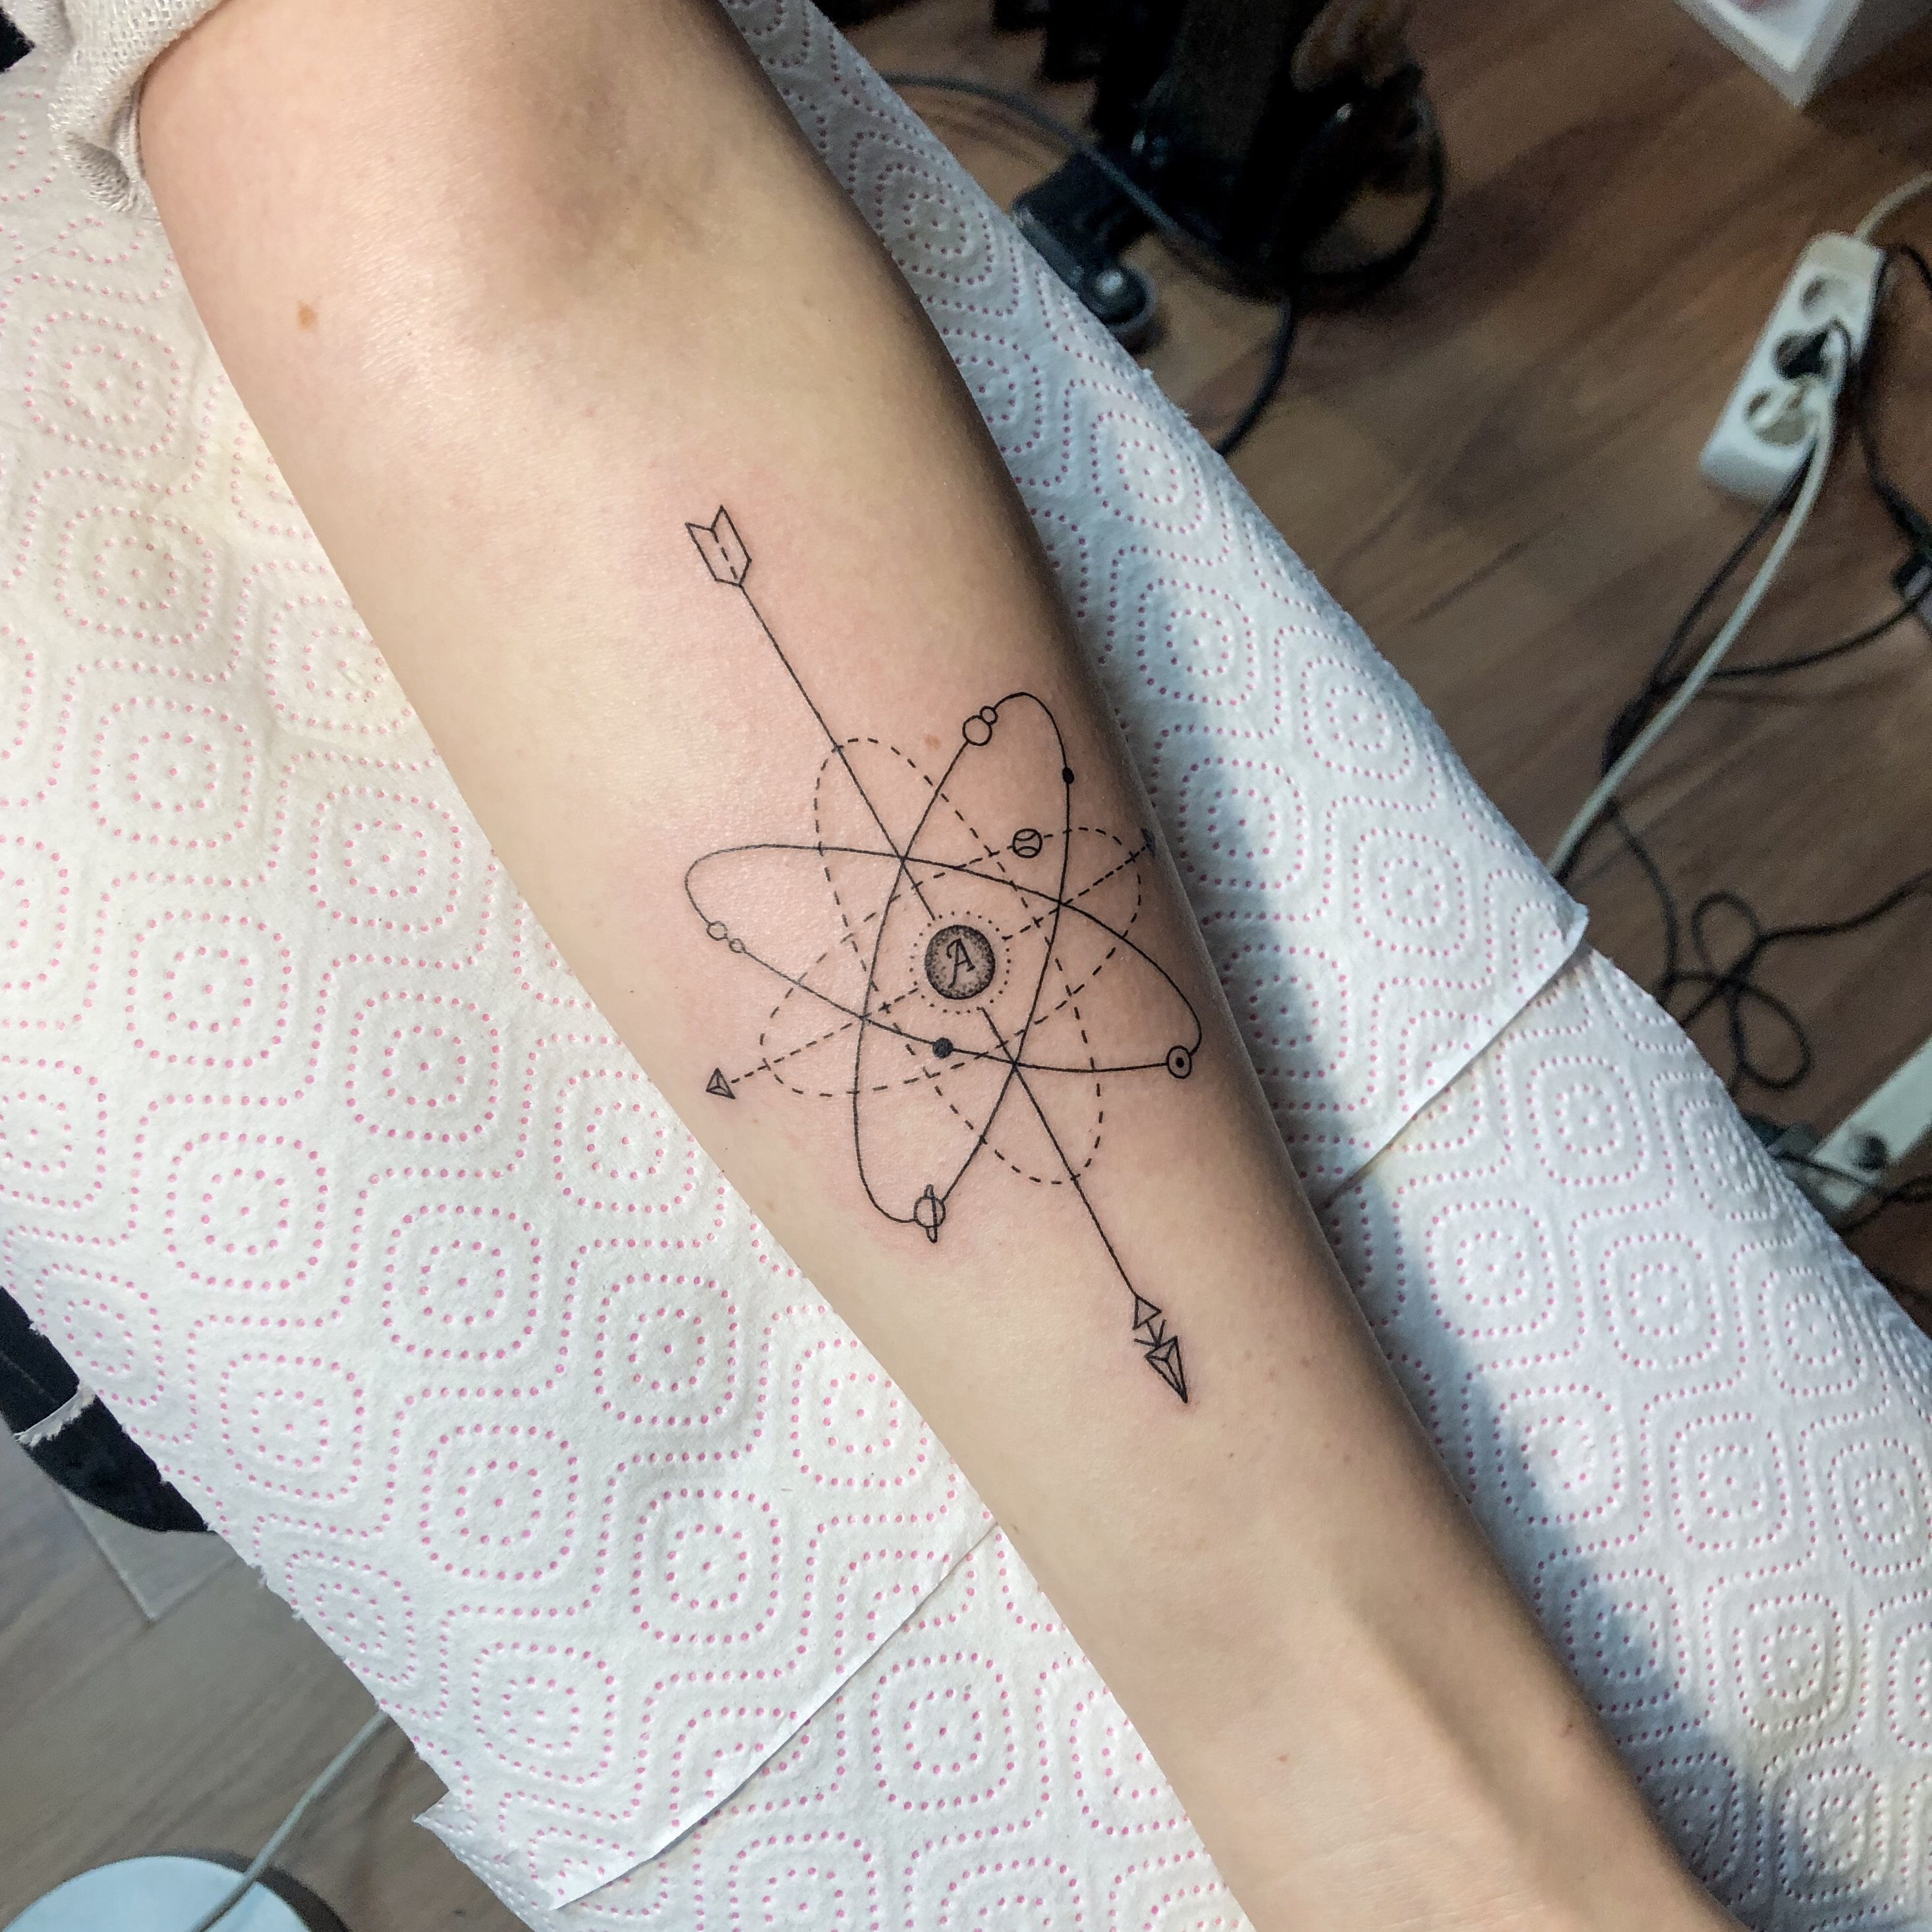 40 Atom Tattoo Designs For Men  Chemical Element Ink Ideas  Atom tattoo  Science tattoos Chemistry tattoo